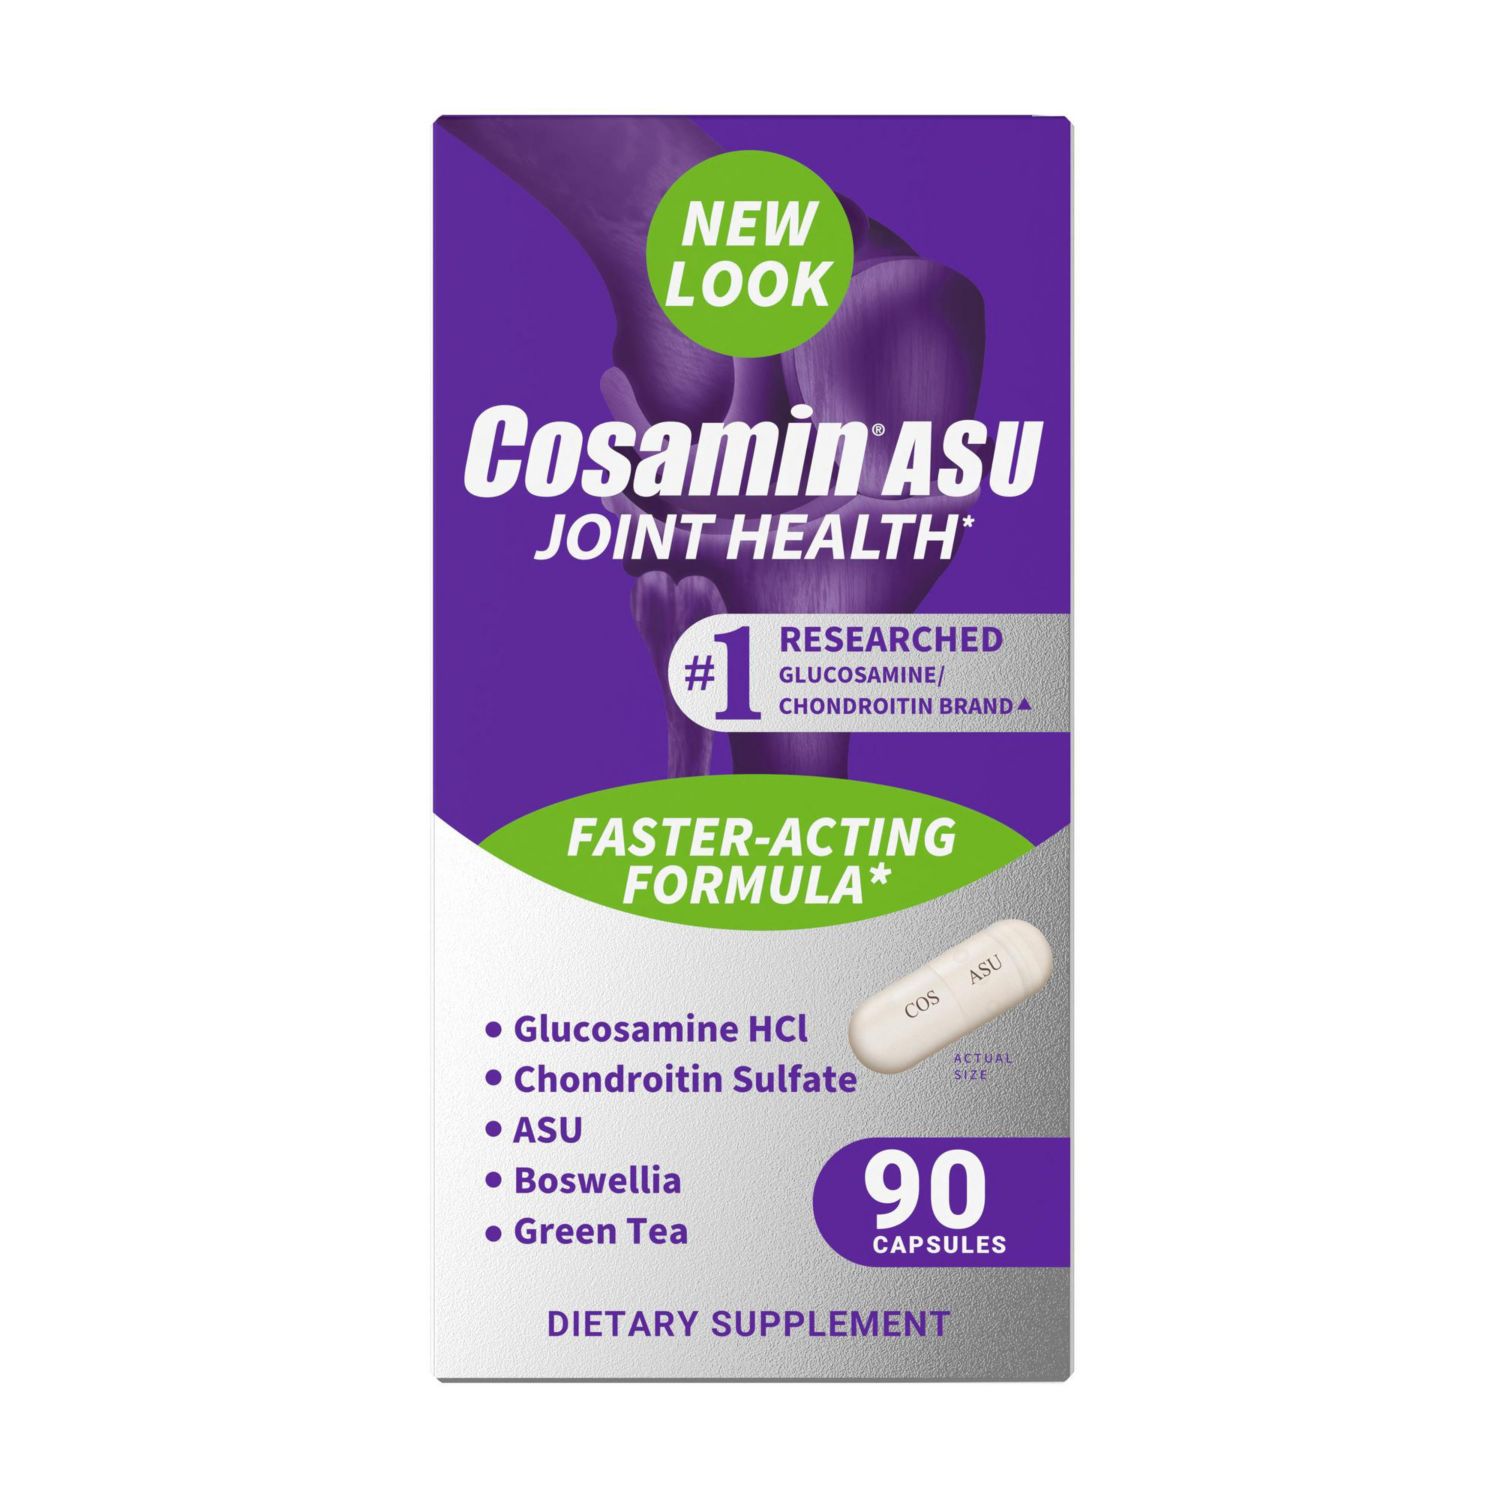 Cosamin ASU Advanced Formula Joint Health Supplement Capsules, 90 CT